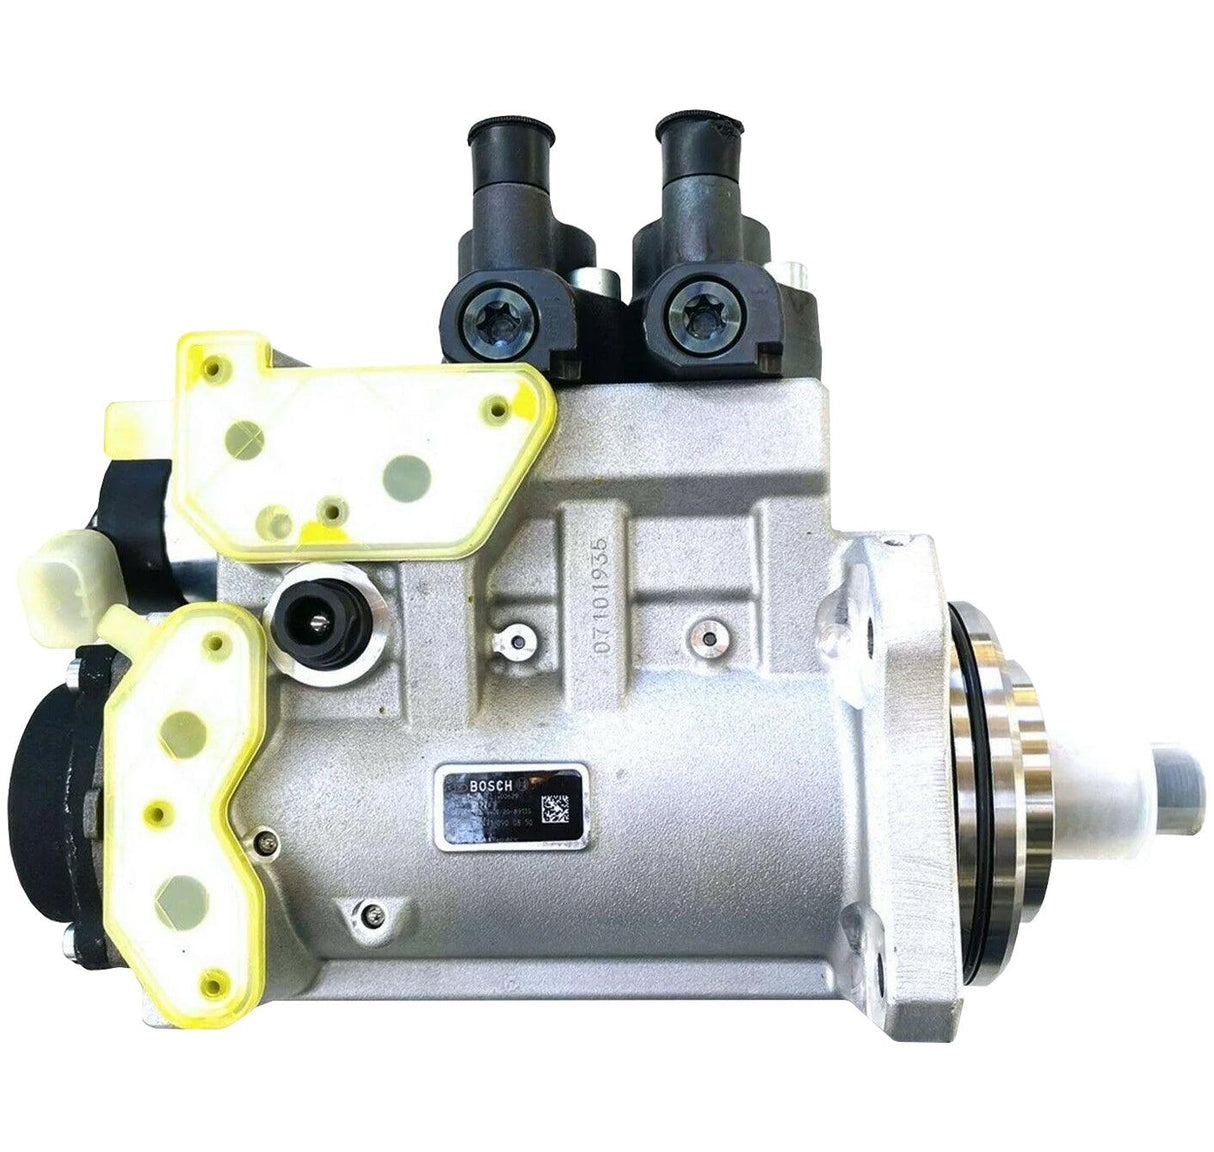 A4710900850 Genuine Detroit Diesel Fuel Injection Pump For Detroit Diesel